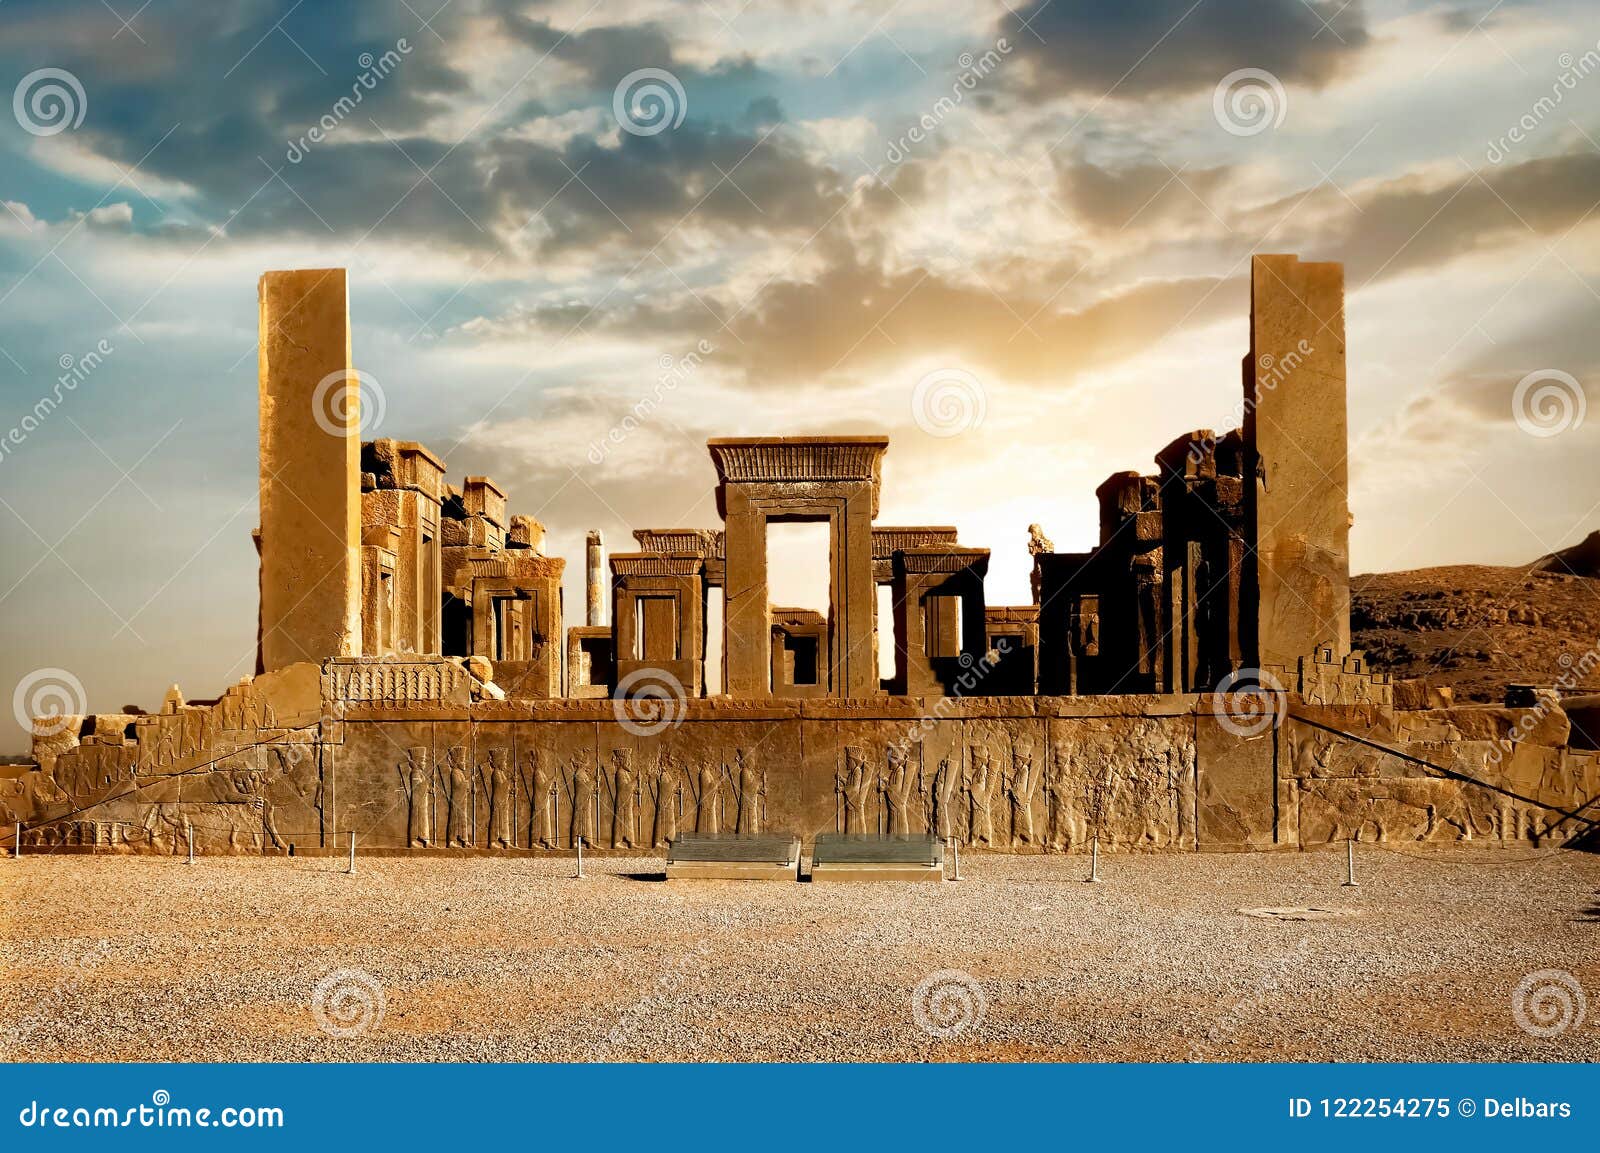 sunrise in persepolis, capital of the ancient achaemenid kingdom. ancient columns. sight of iran. ancient persia.